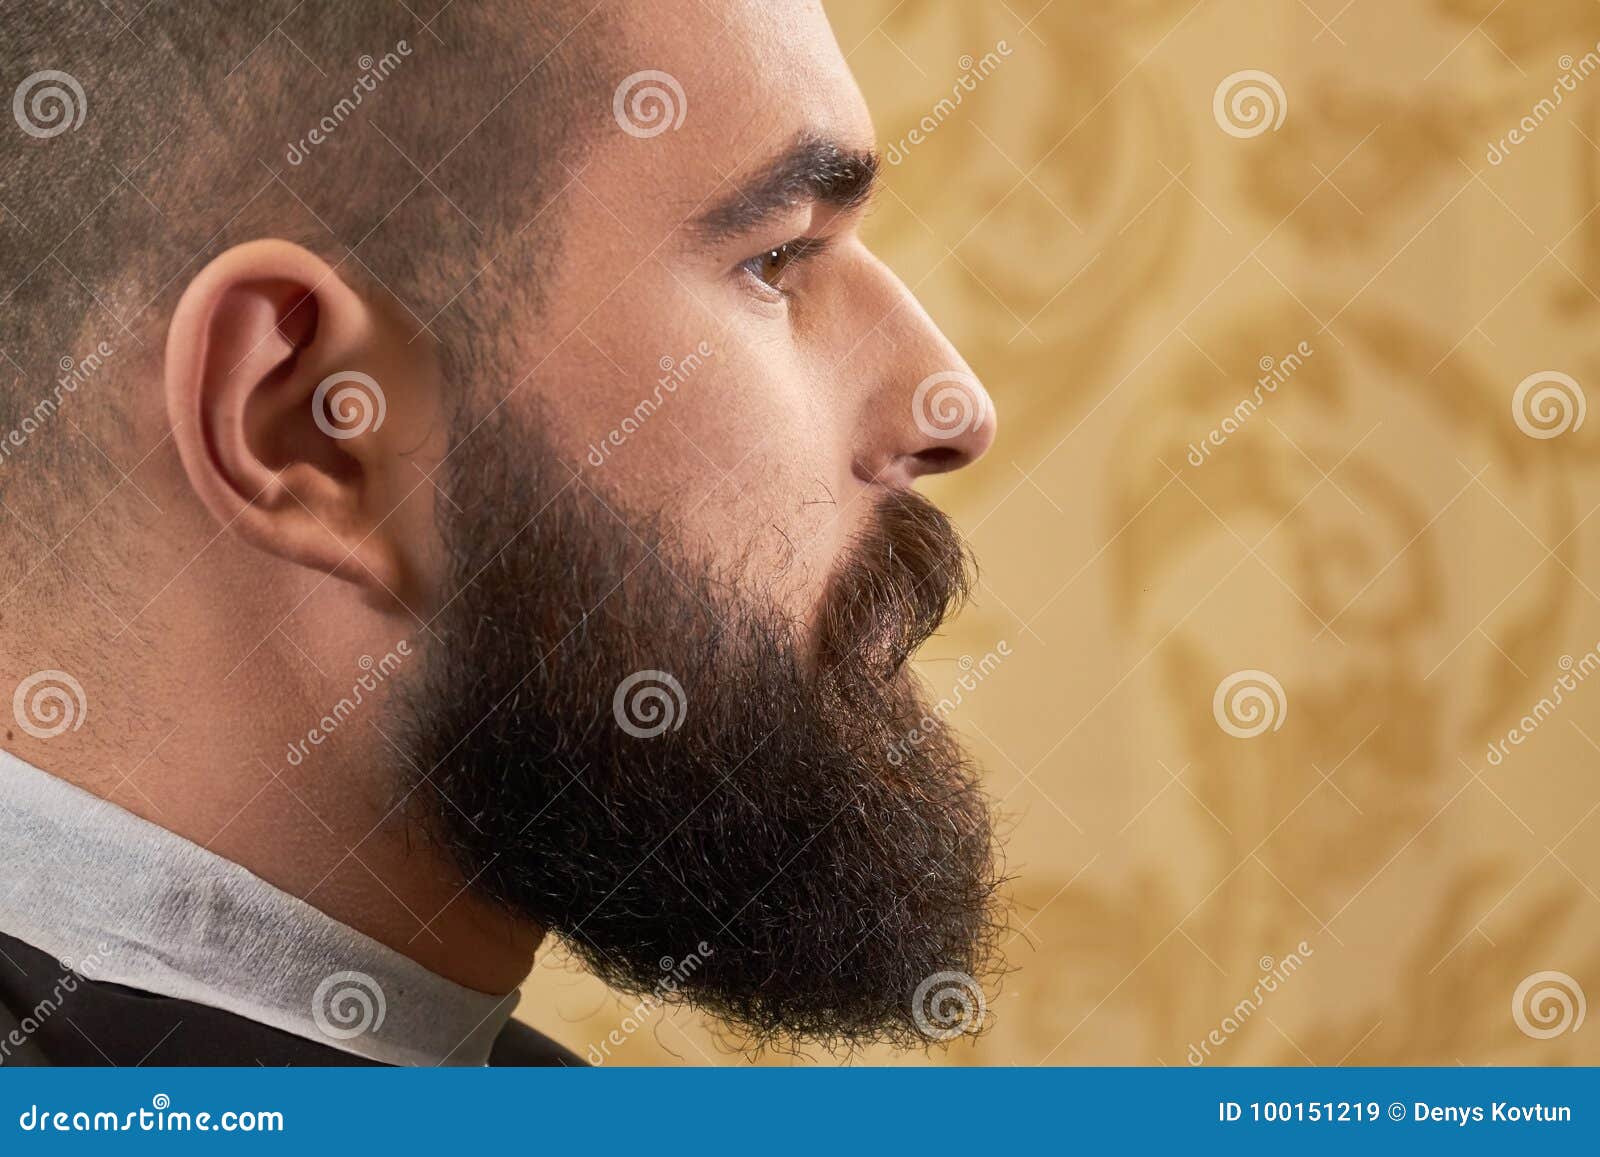 Beard guy with 50+ Halloween